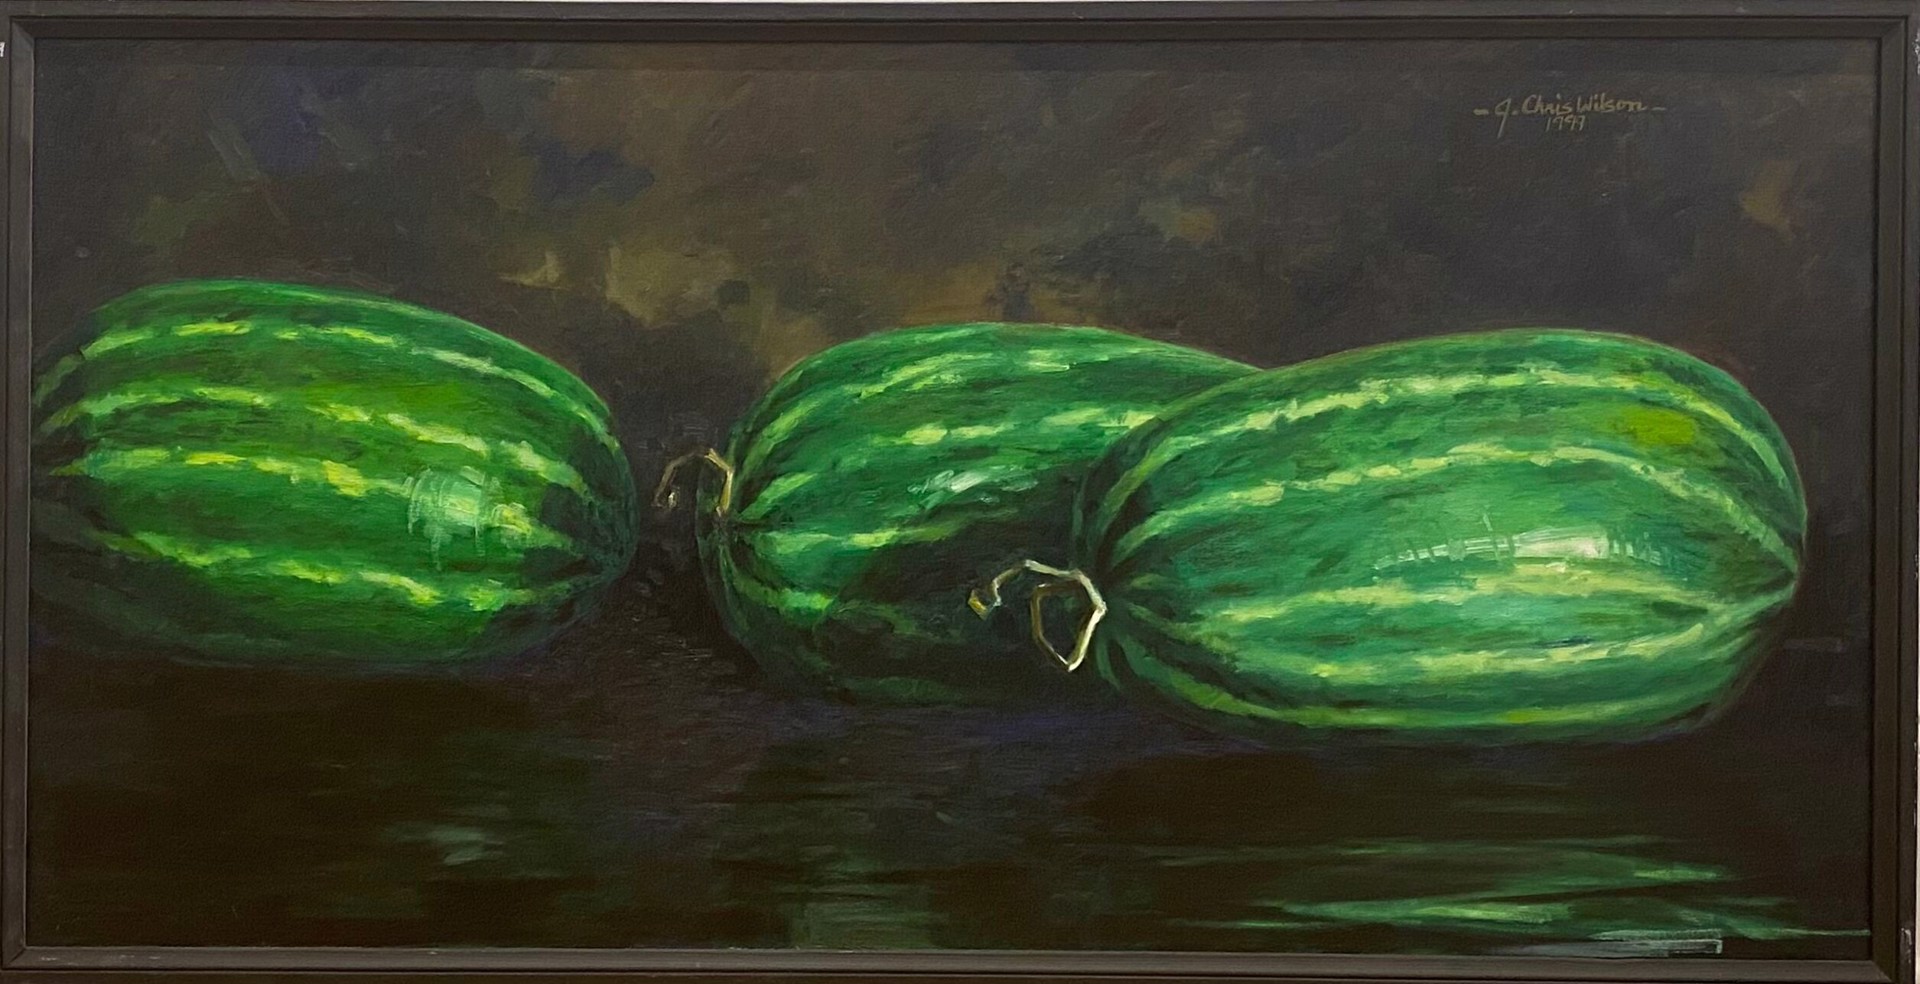 Three Watermelons by J. Chris Wilson